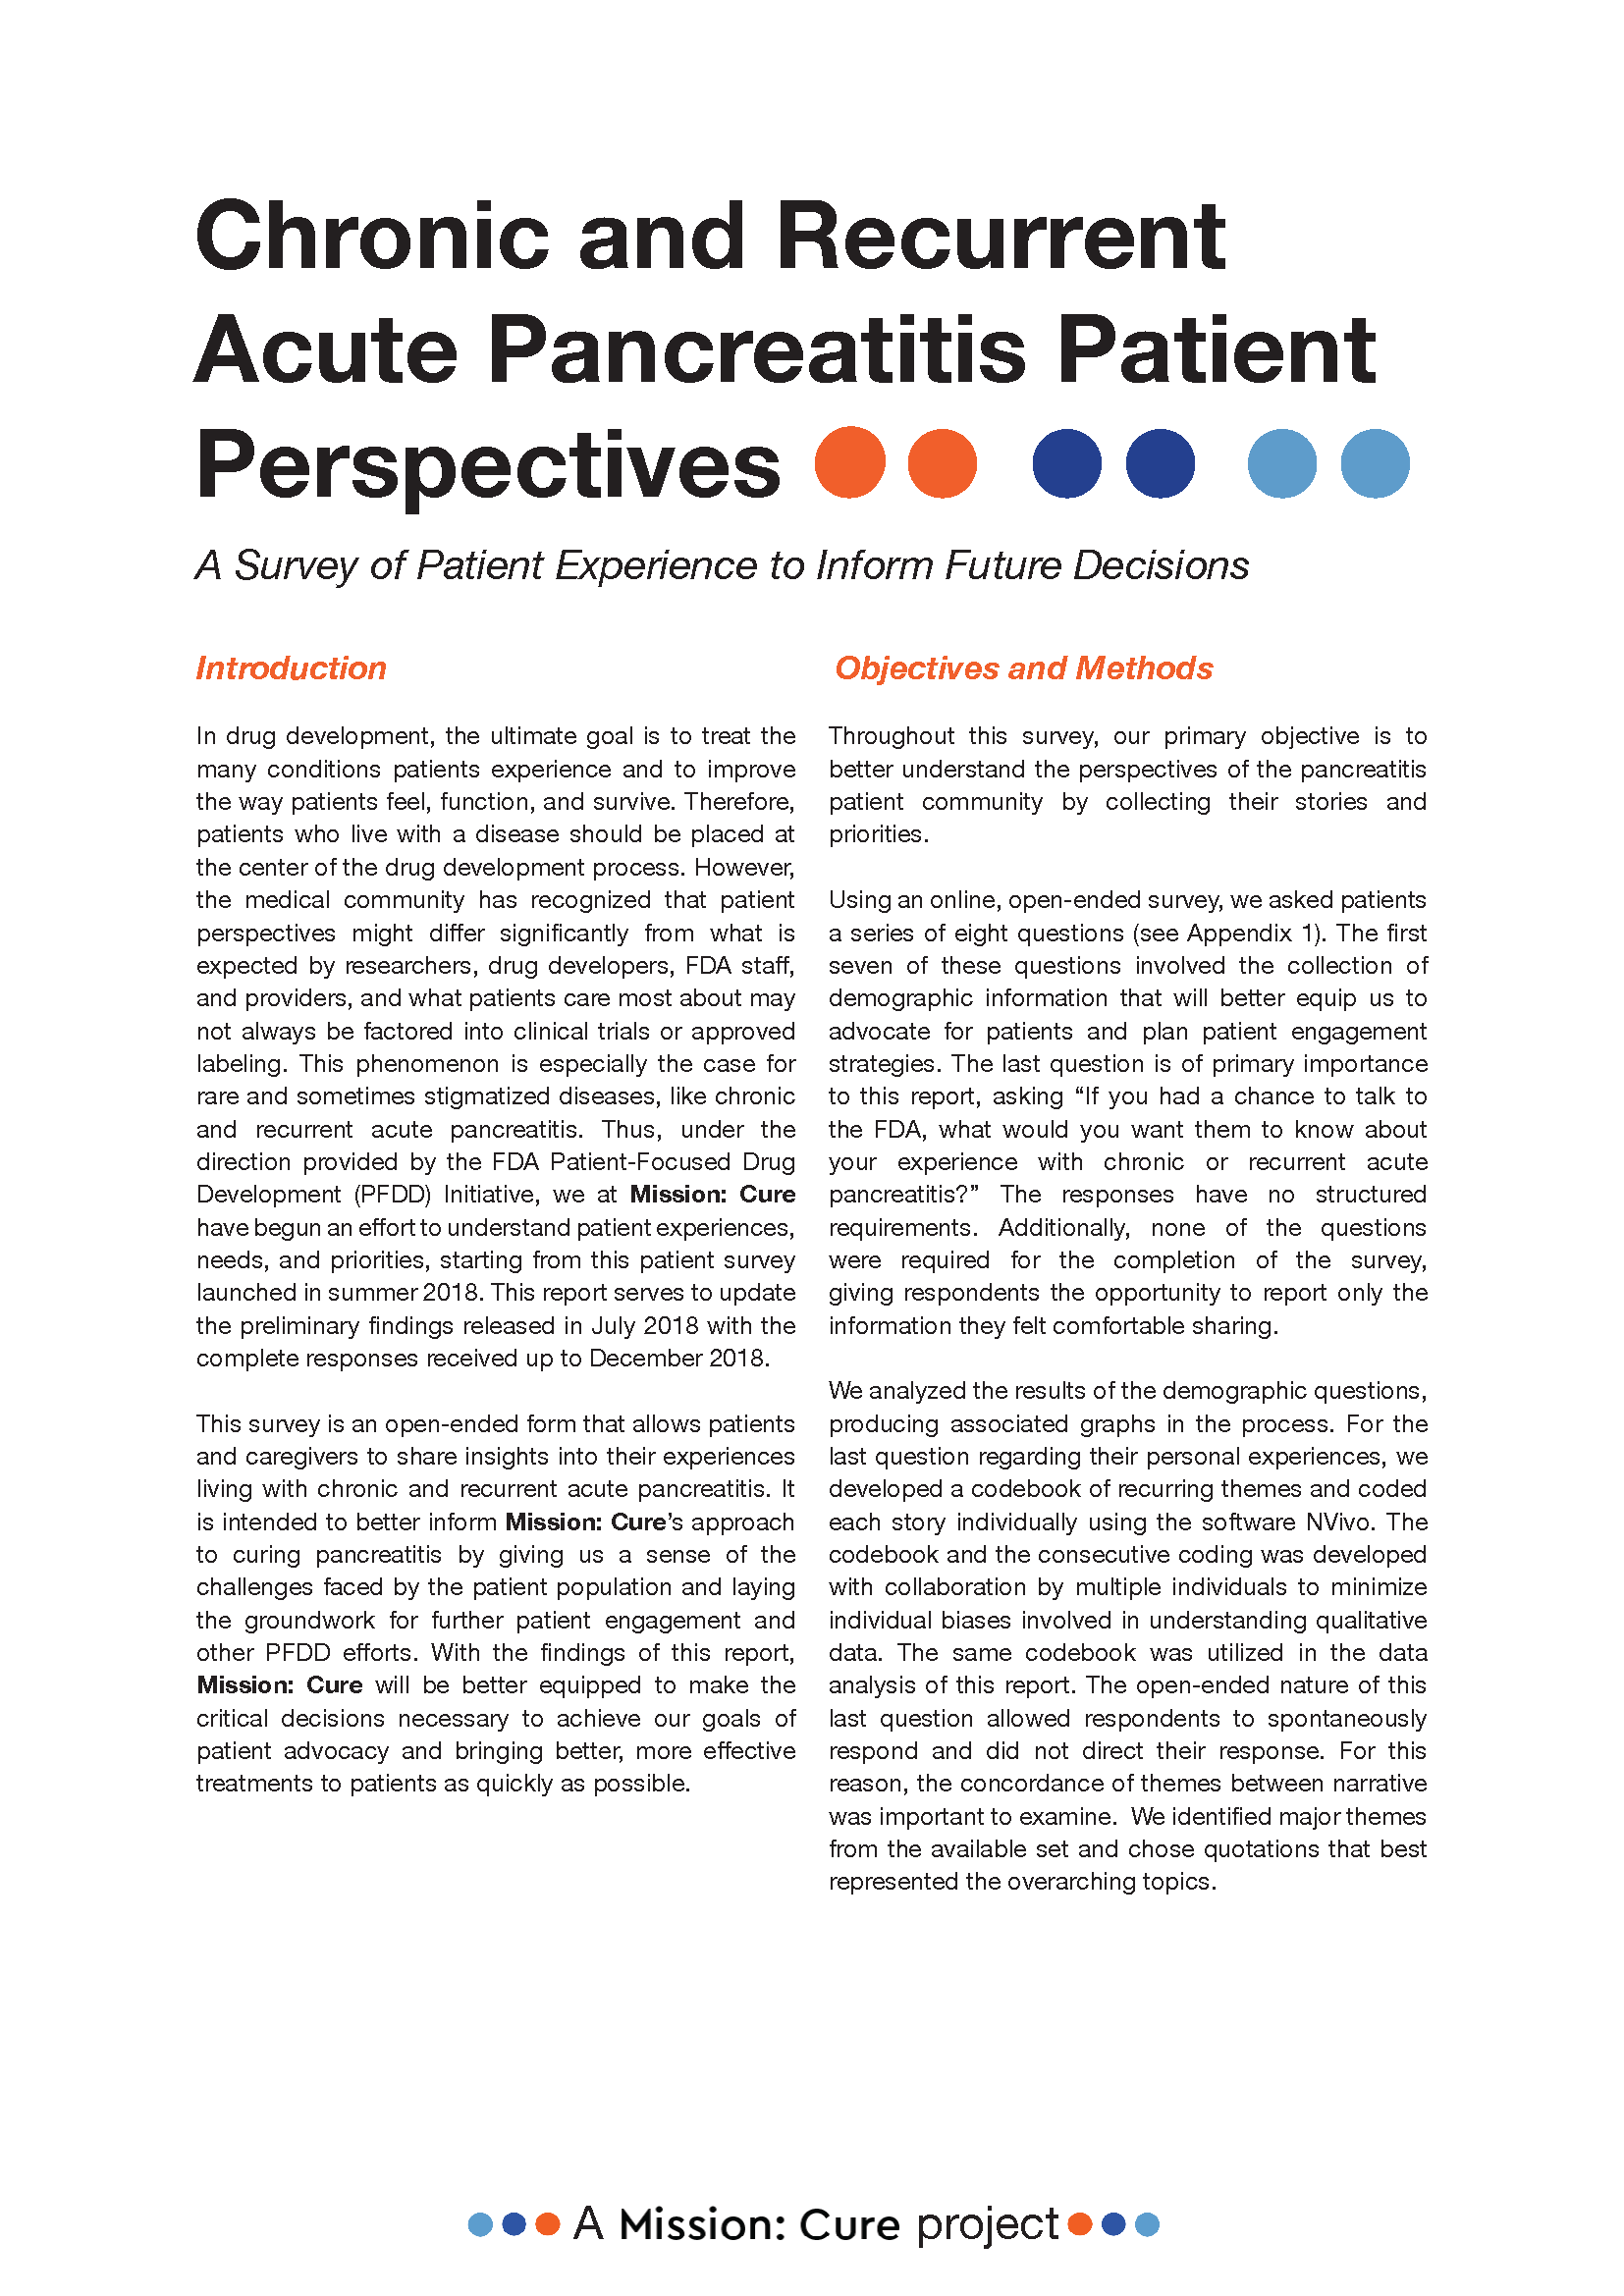 Chronic Pancreatitis and Recurrent Acute Pancreatitis Patient Perspectives Survey_Page_03